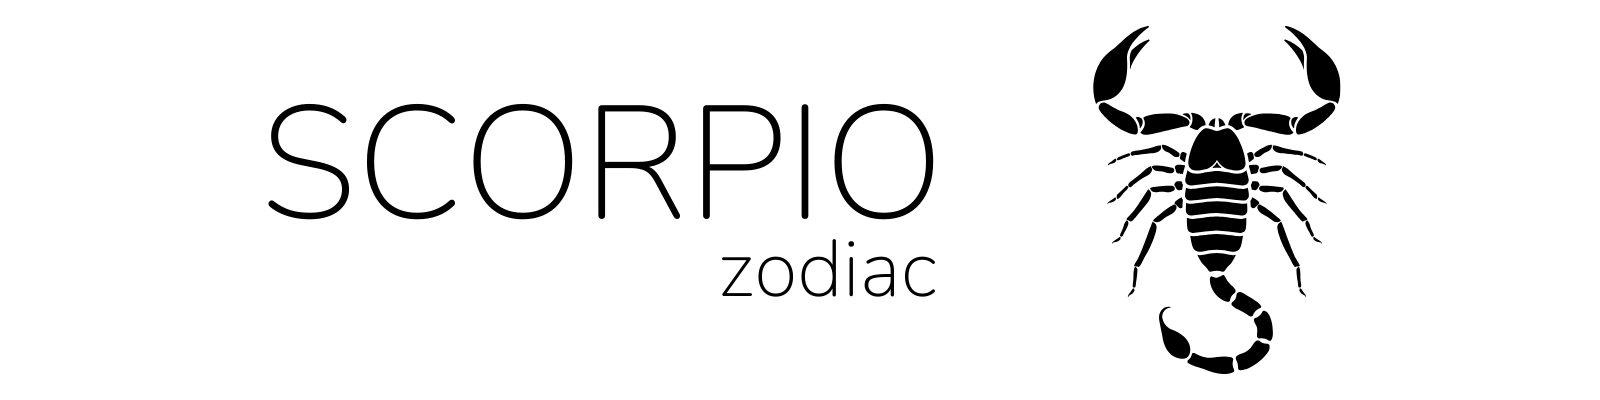 Image of Scorpio zodiac sign